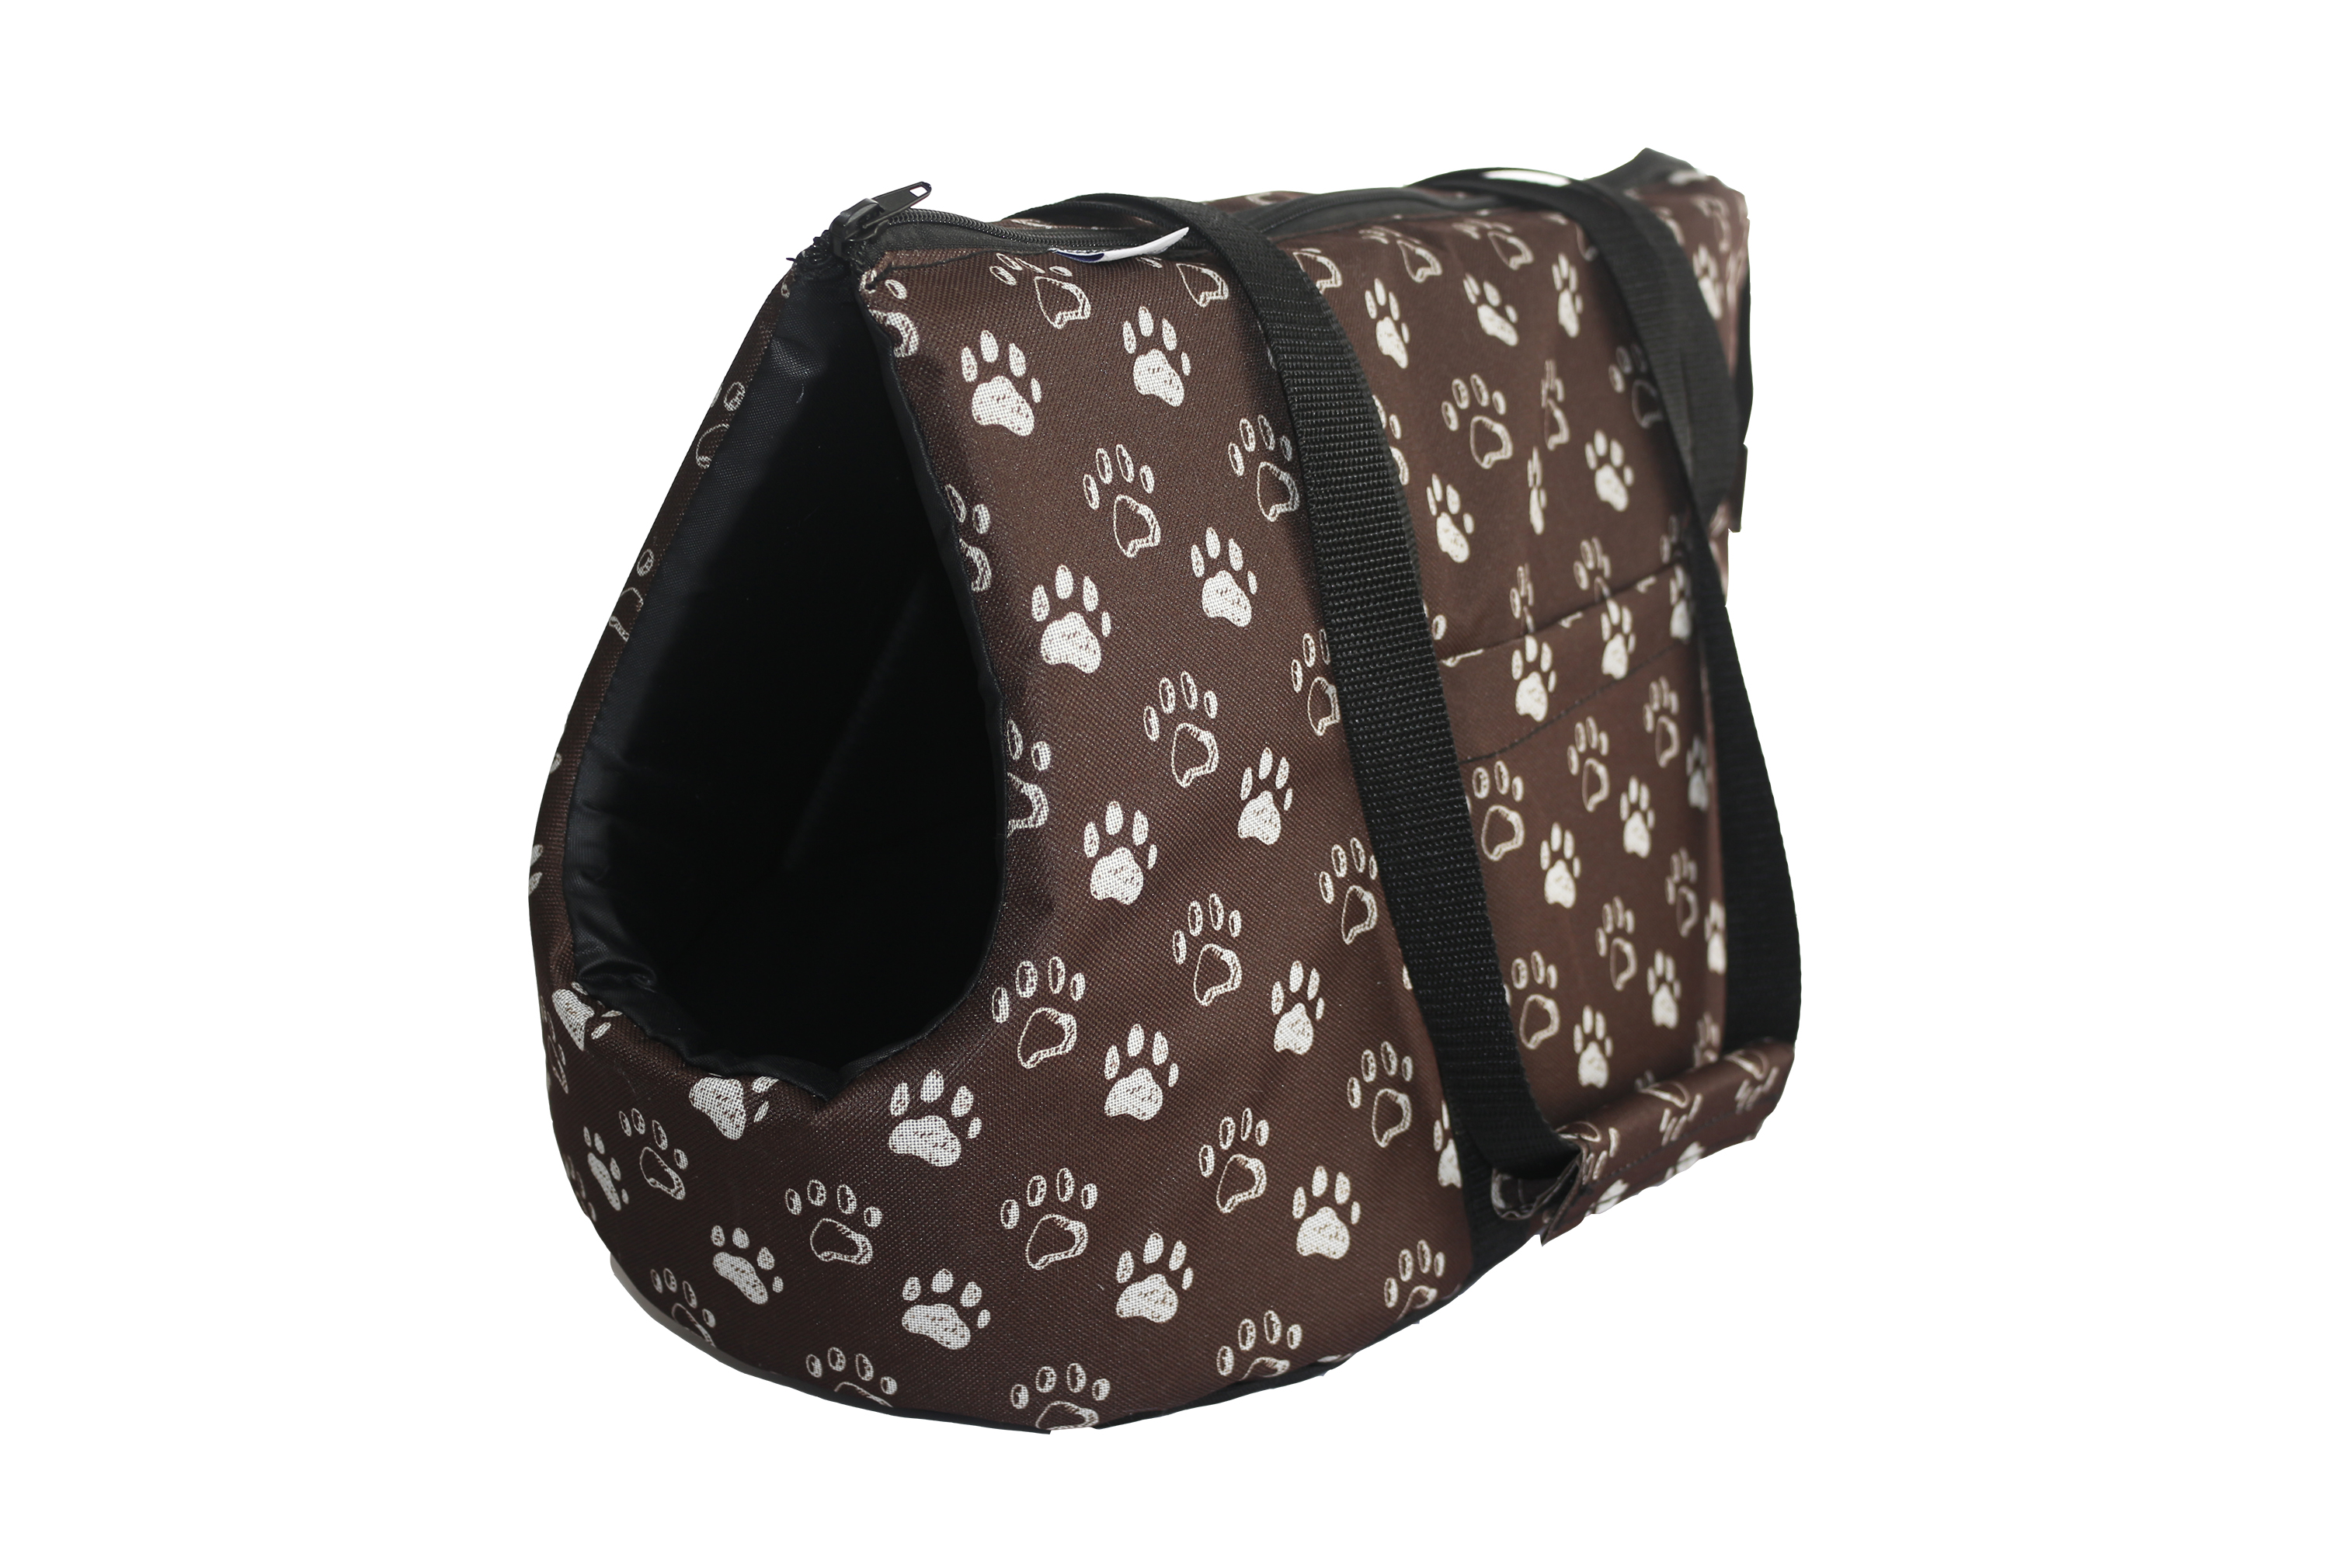 Rajen travel dog bag, 3 sizes, motif P-24